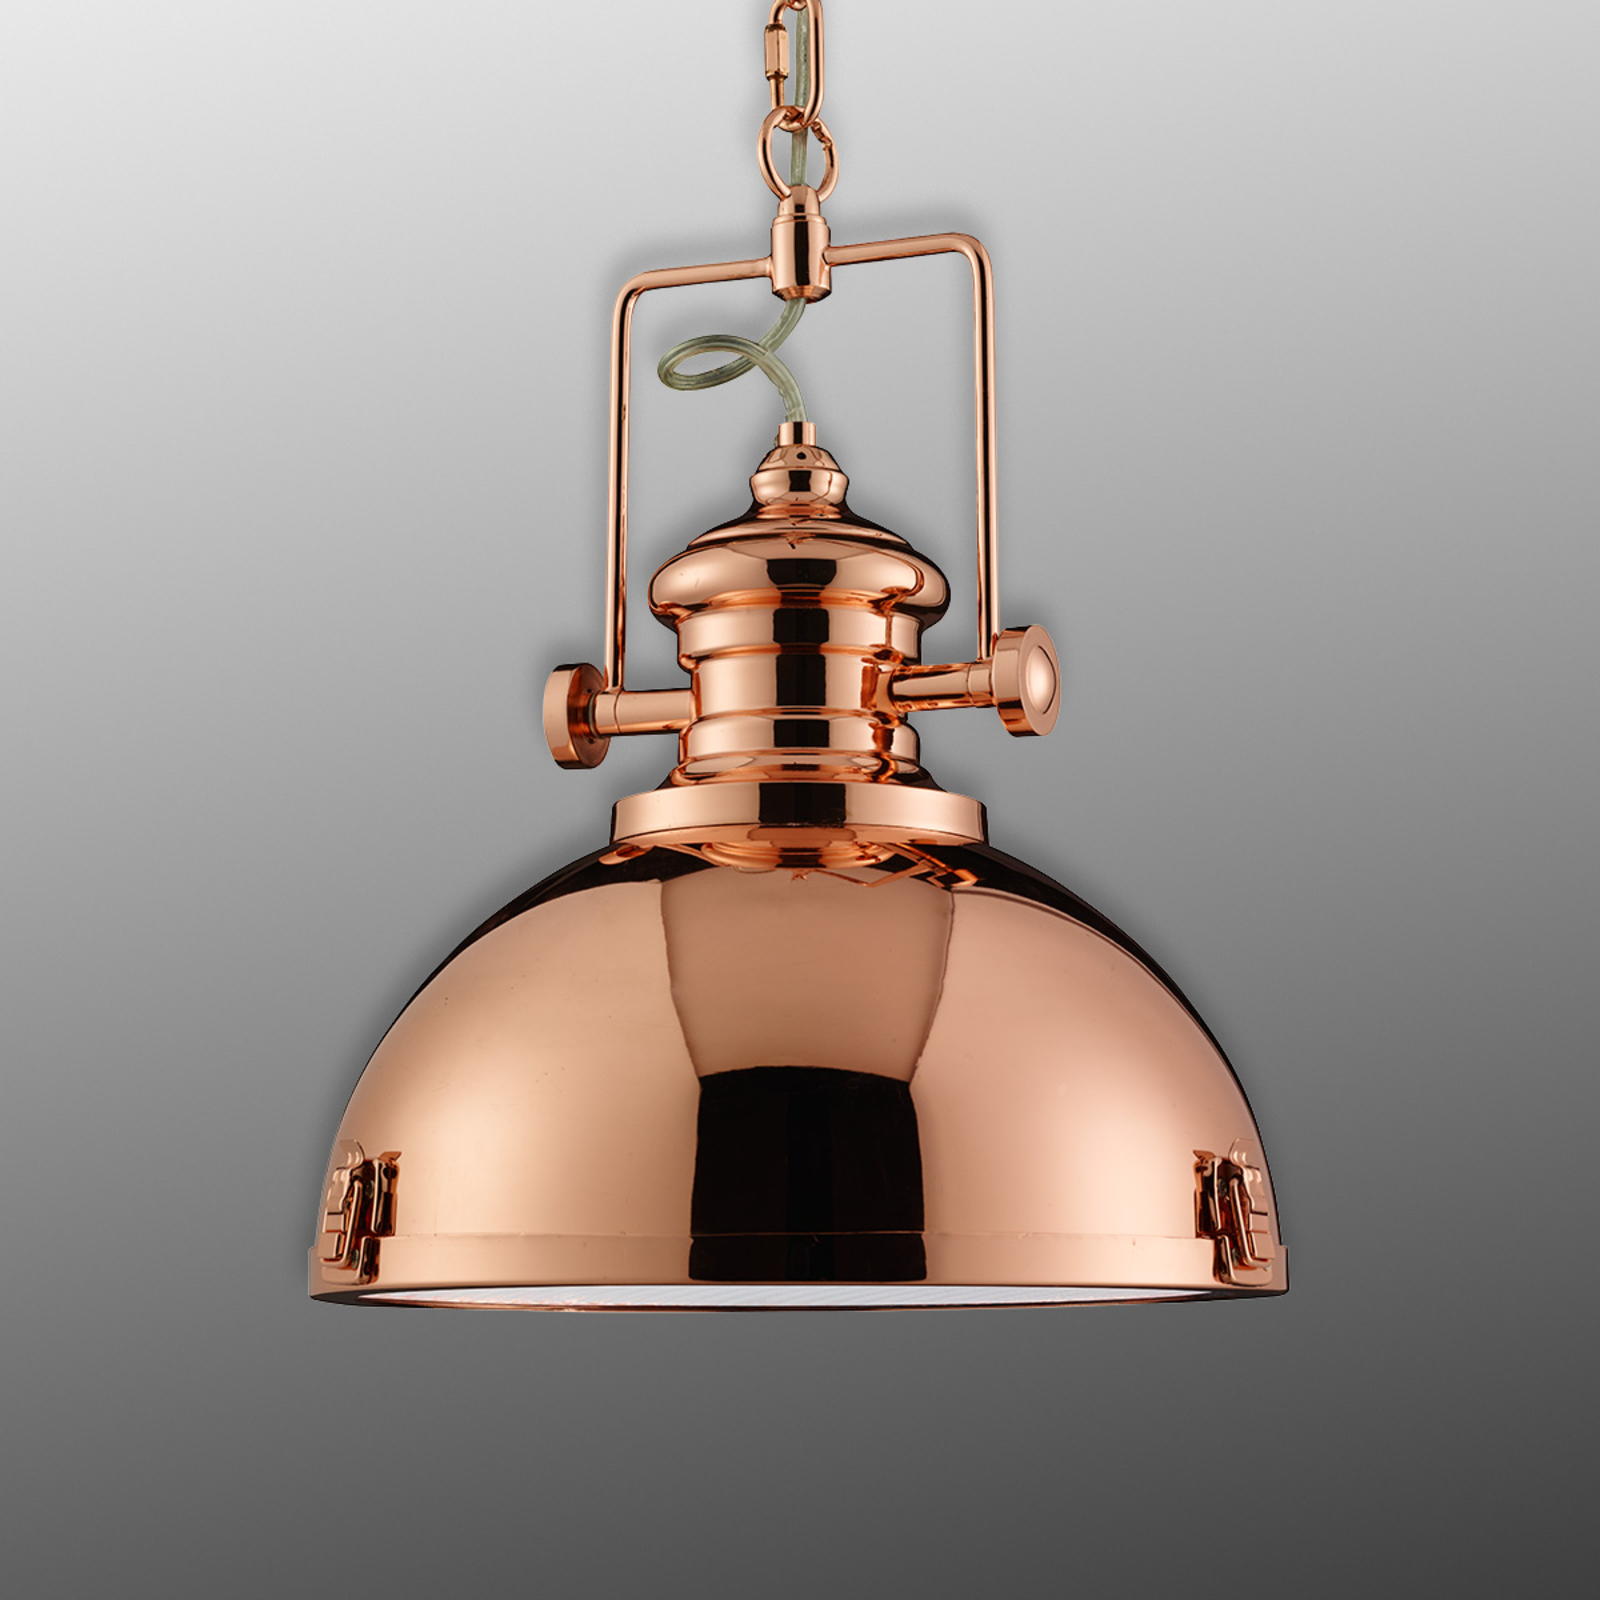 Metal pendant light, industrial design, copper-coloured